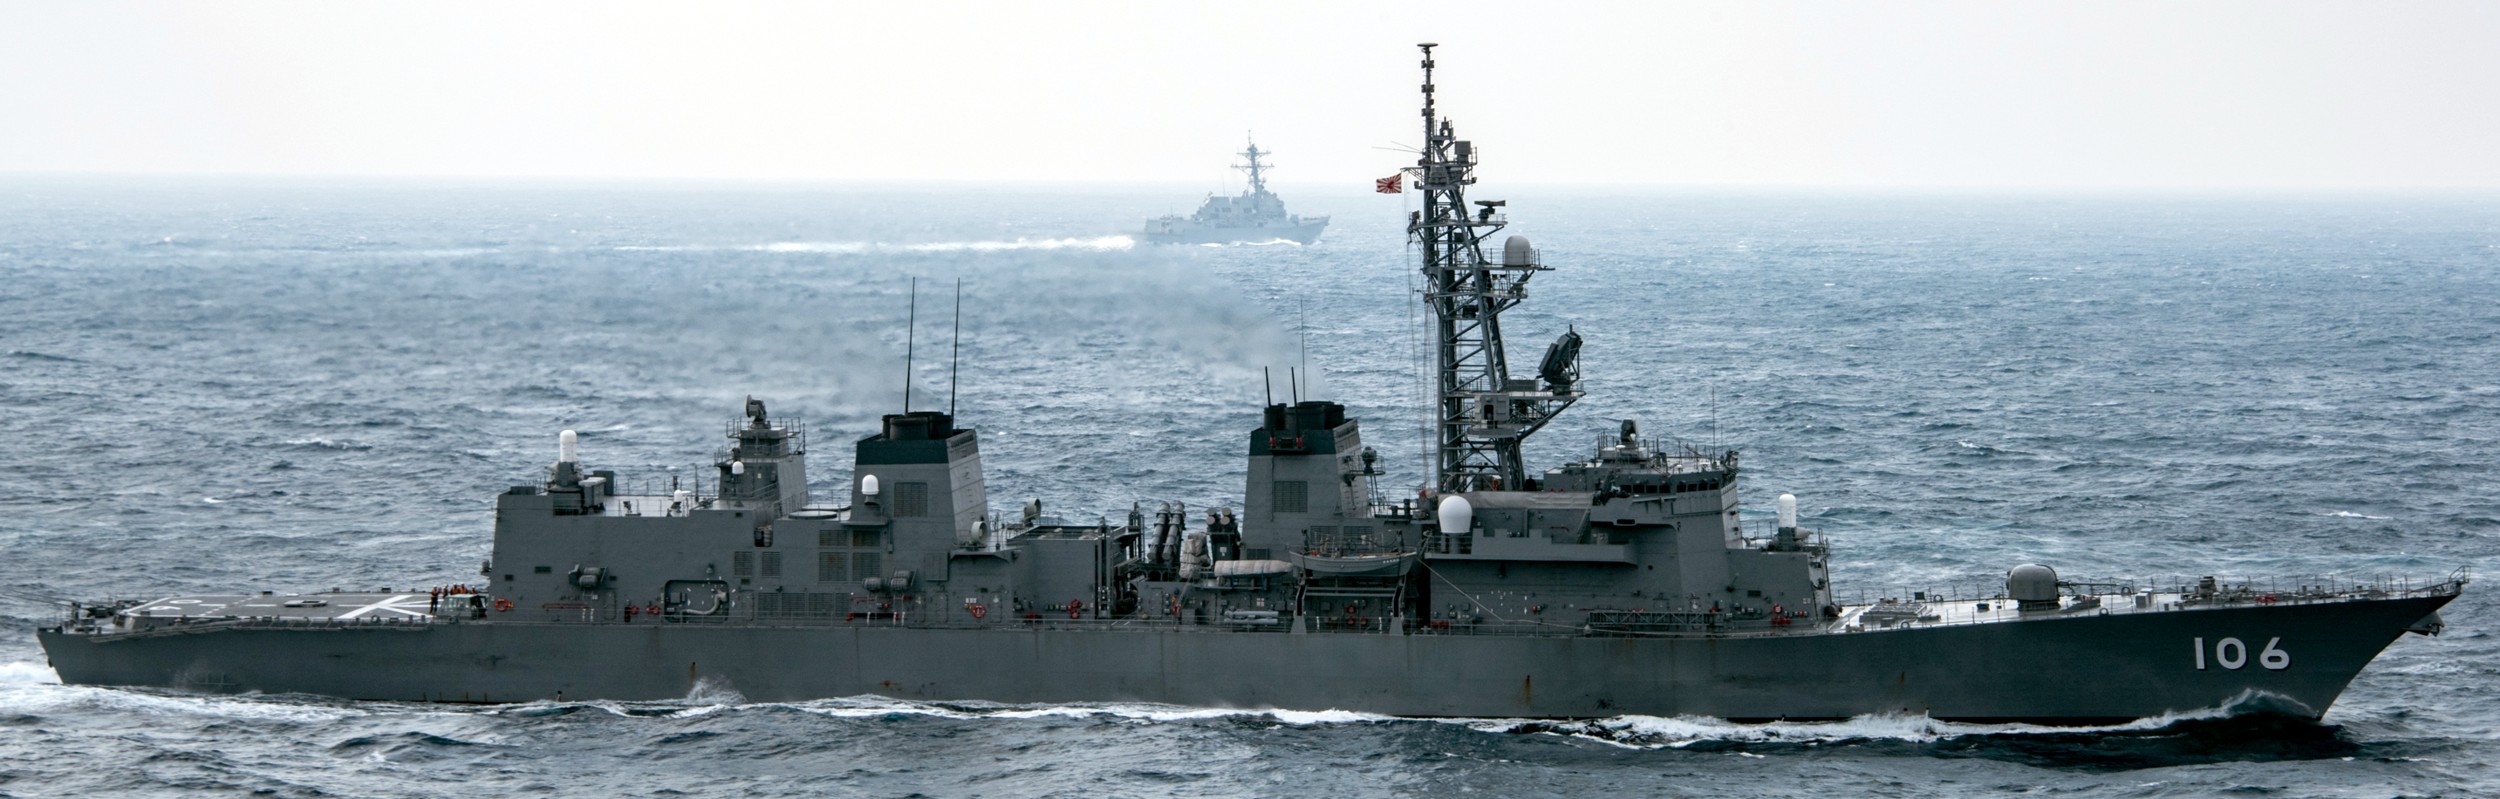 dd-106 js samidare murasame class destroyer japan maritime self defense force jmsdf 31